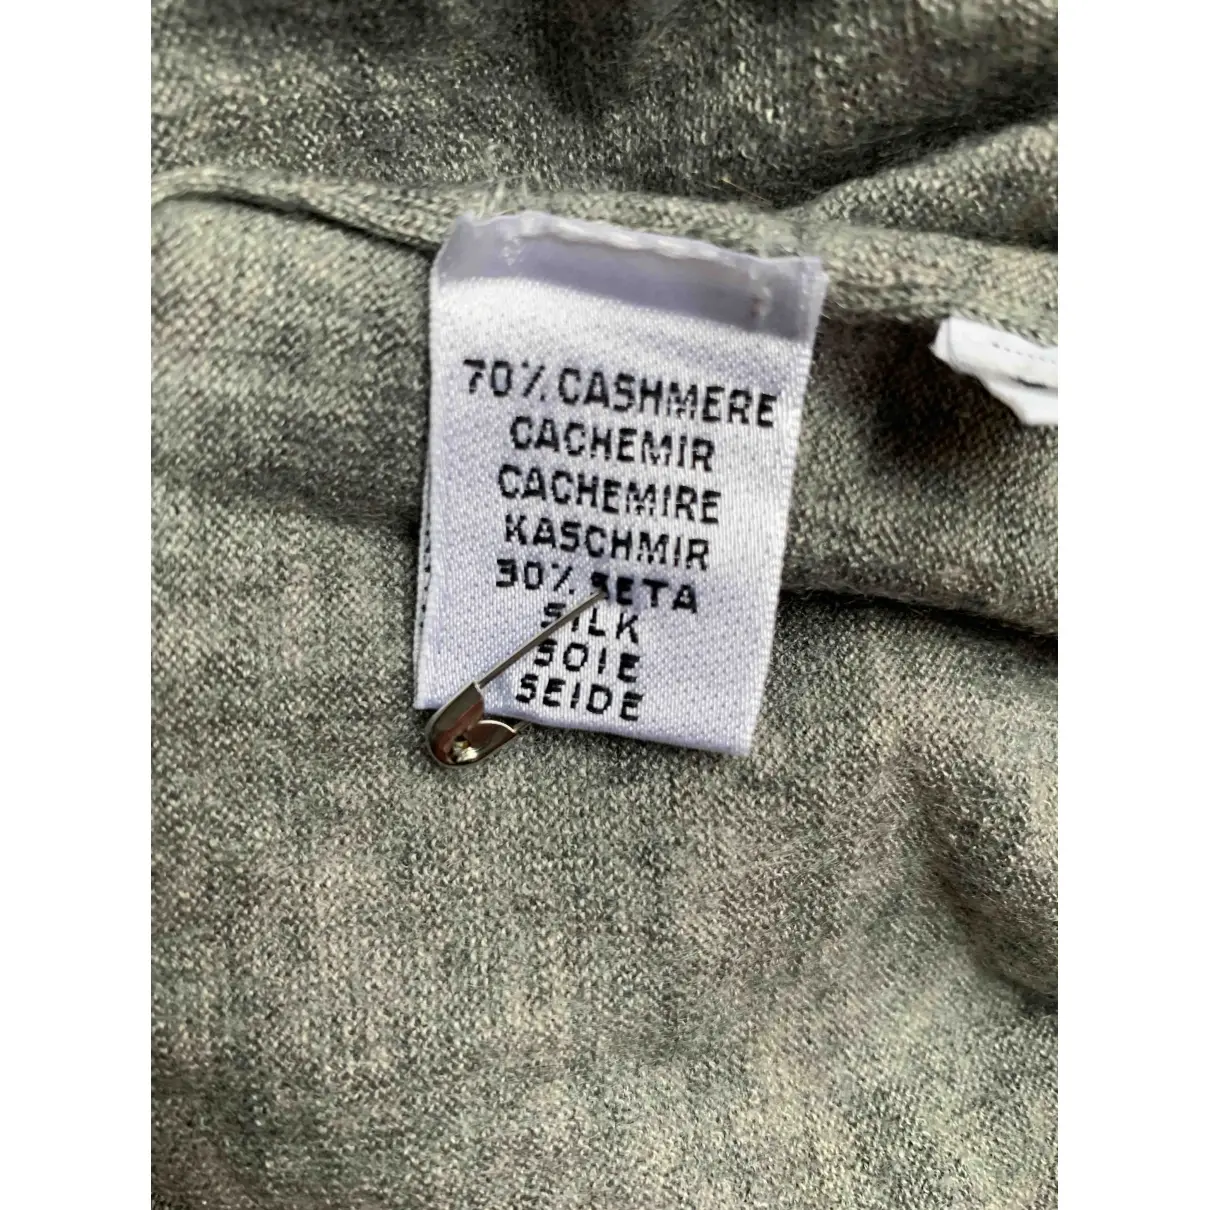 Buy Francesco Smalto Cashmere pull online - Vintage